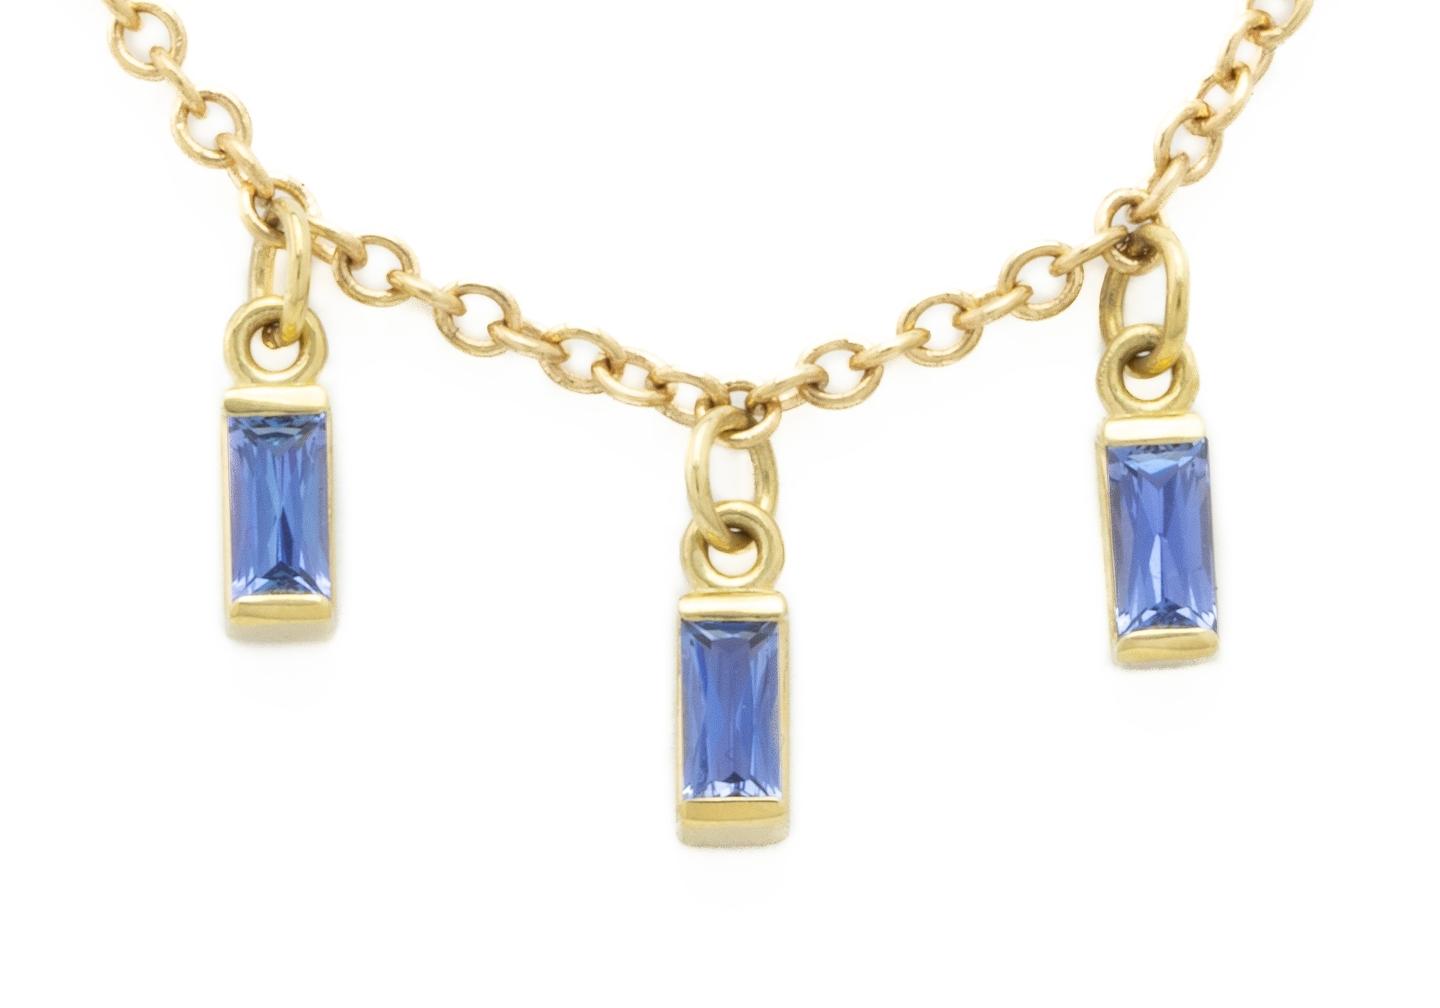 14k Yogo Sapphire Necklace